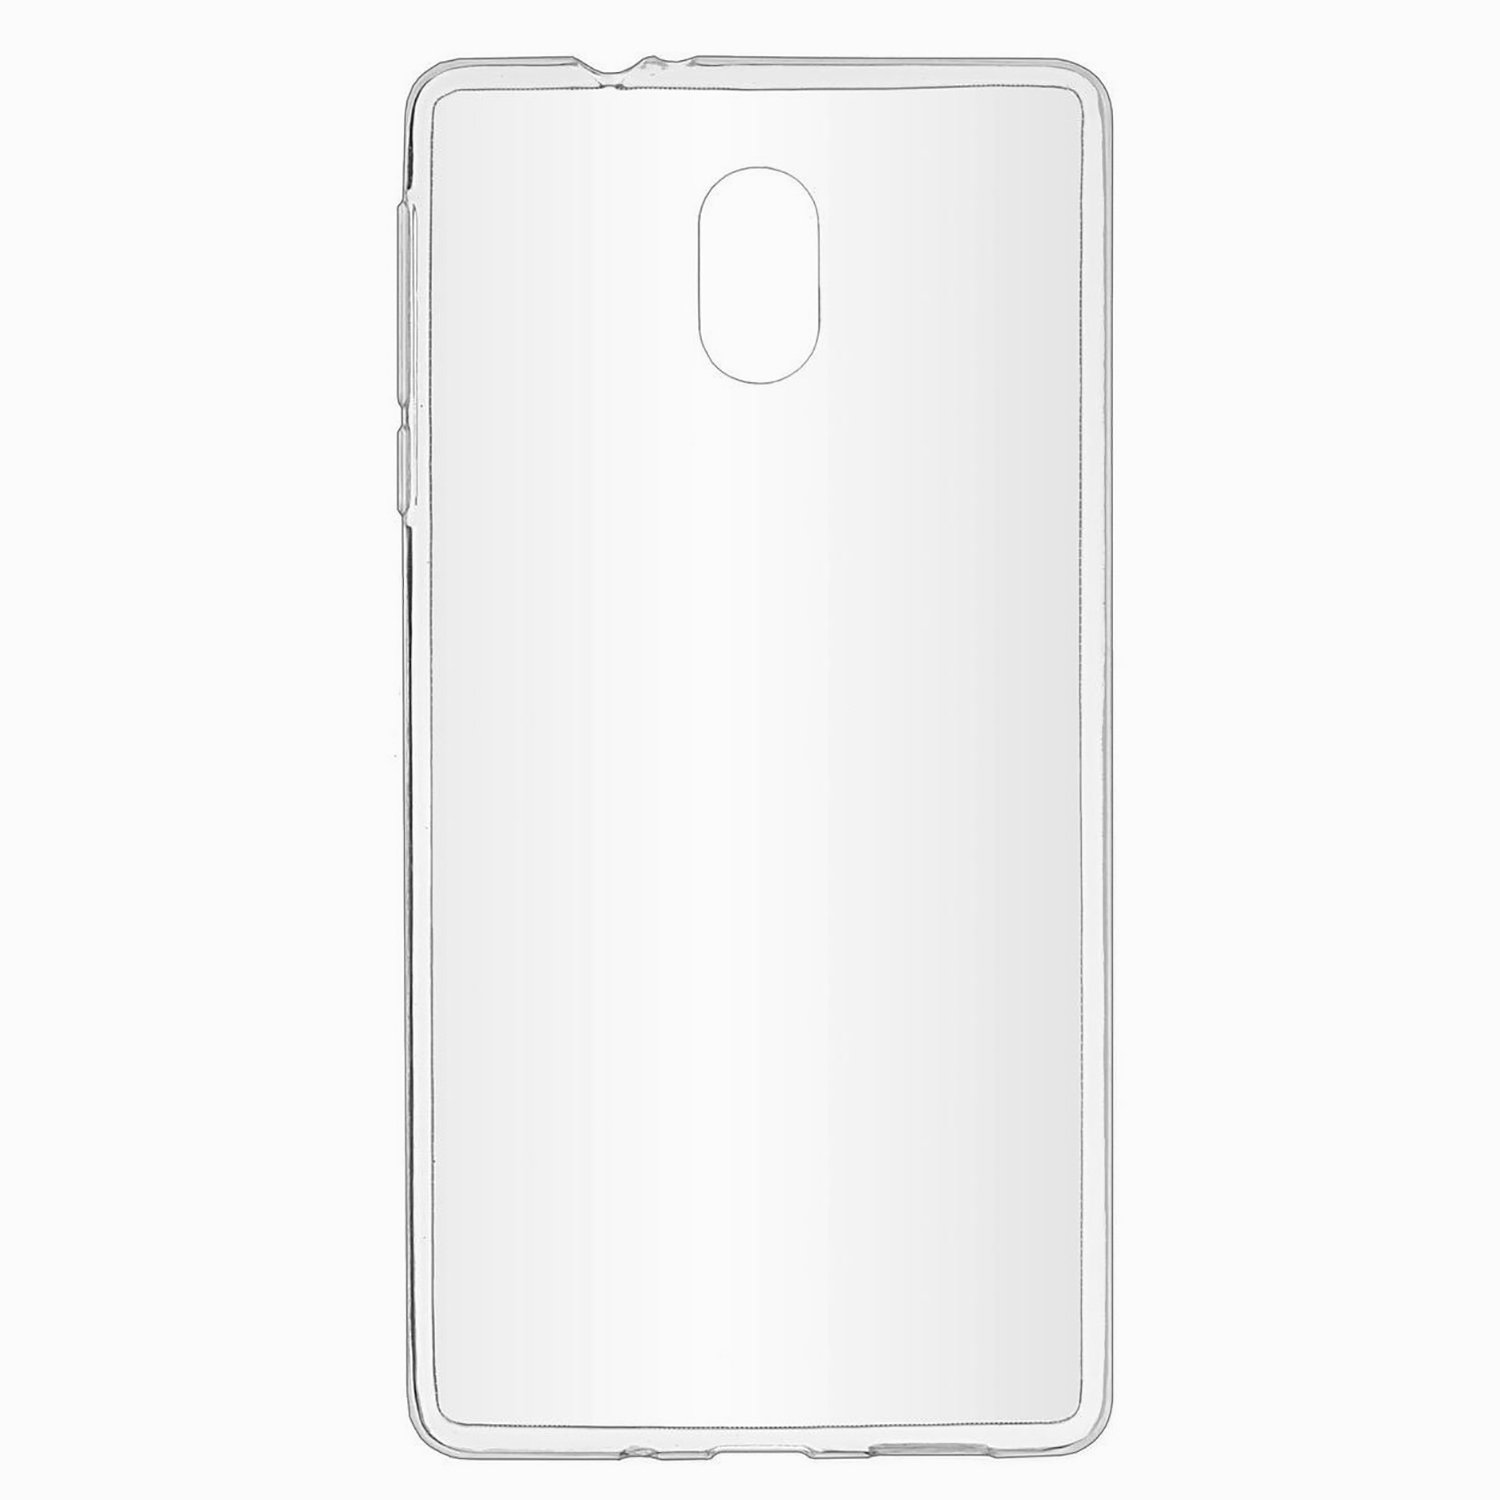 Чехол-накладка Ultra Slim для смартфона Nokia 3, силикон, прозрачный (76941)